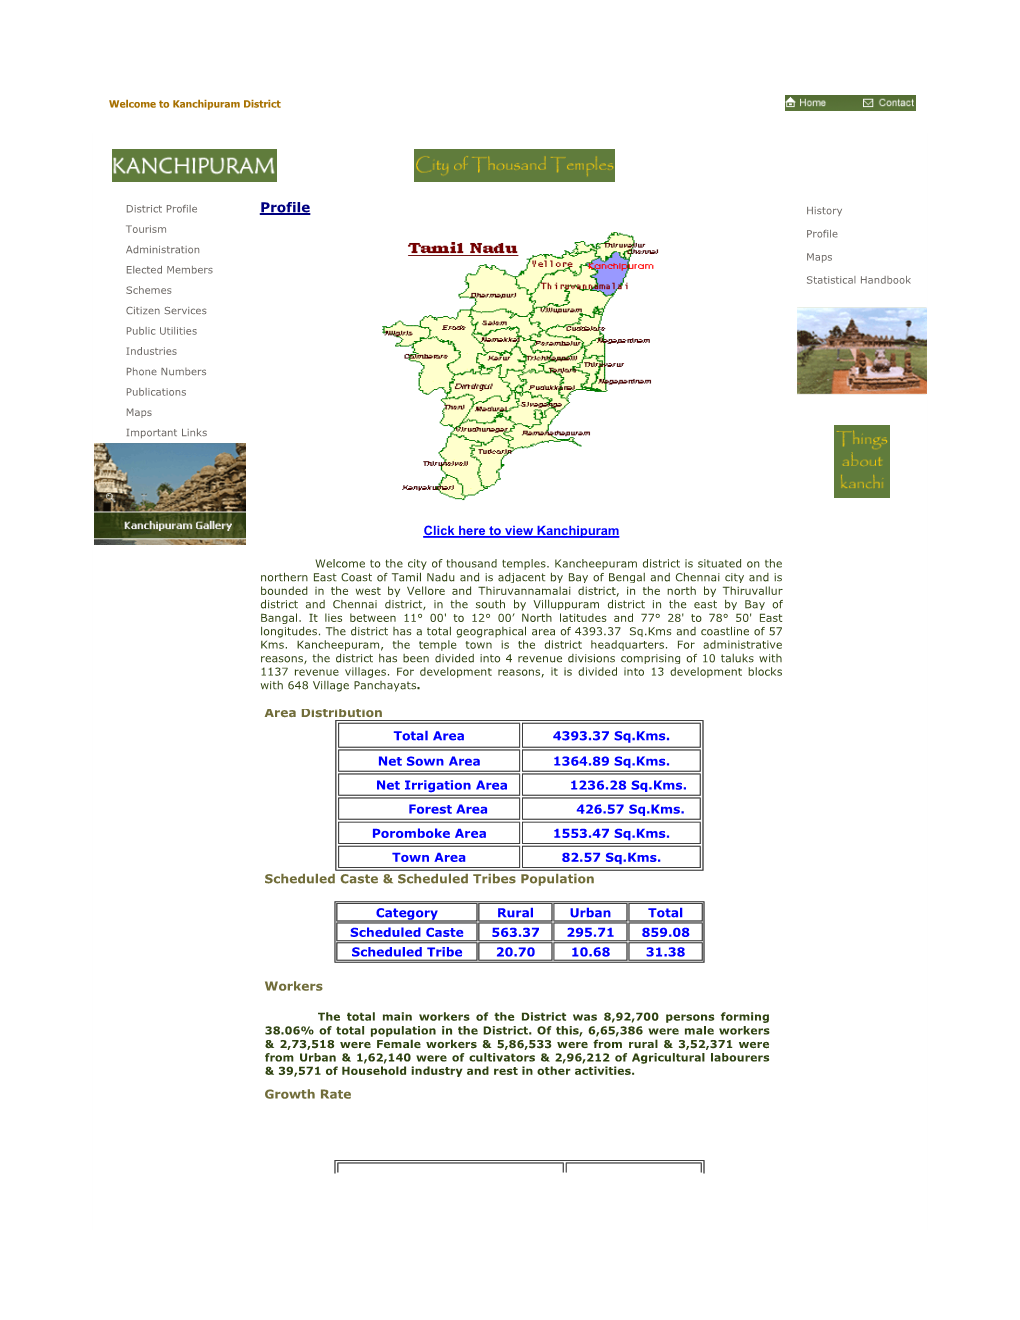 TIST in PD-VCS-Ex 11 Kanchipuram District Profile.Pdf